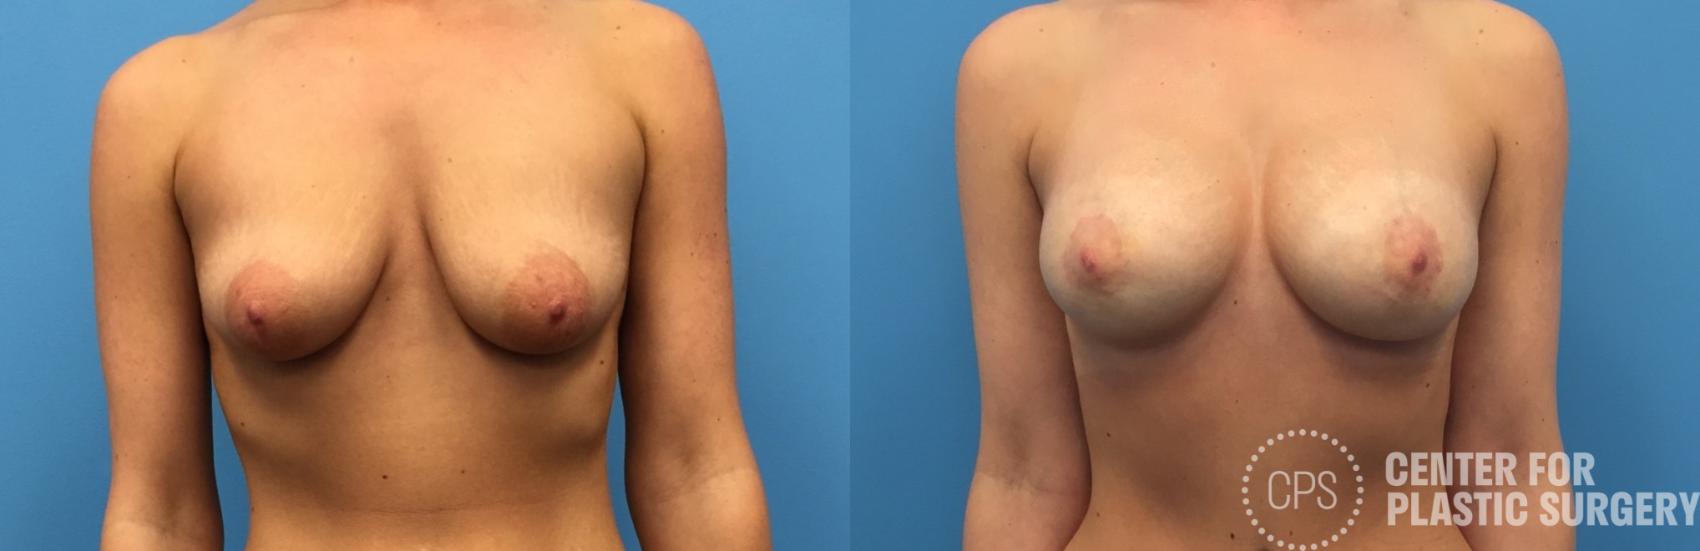 Breast Augmentation with Lift Case 233 Before & After Front | Washington, DC, Washington D.C. Metropolitan Area | Center for Plastic Surgery